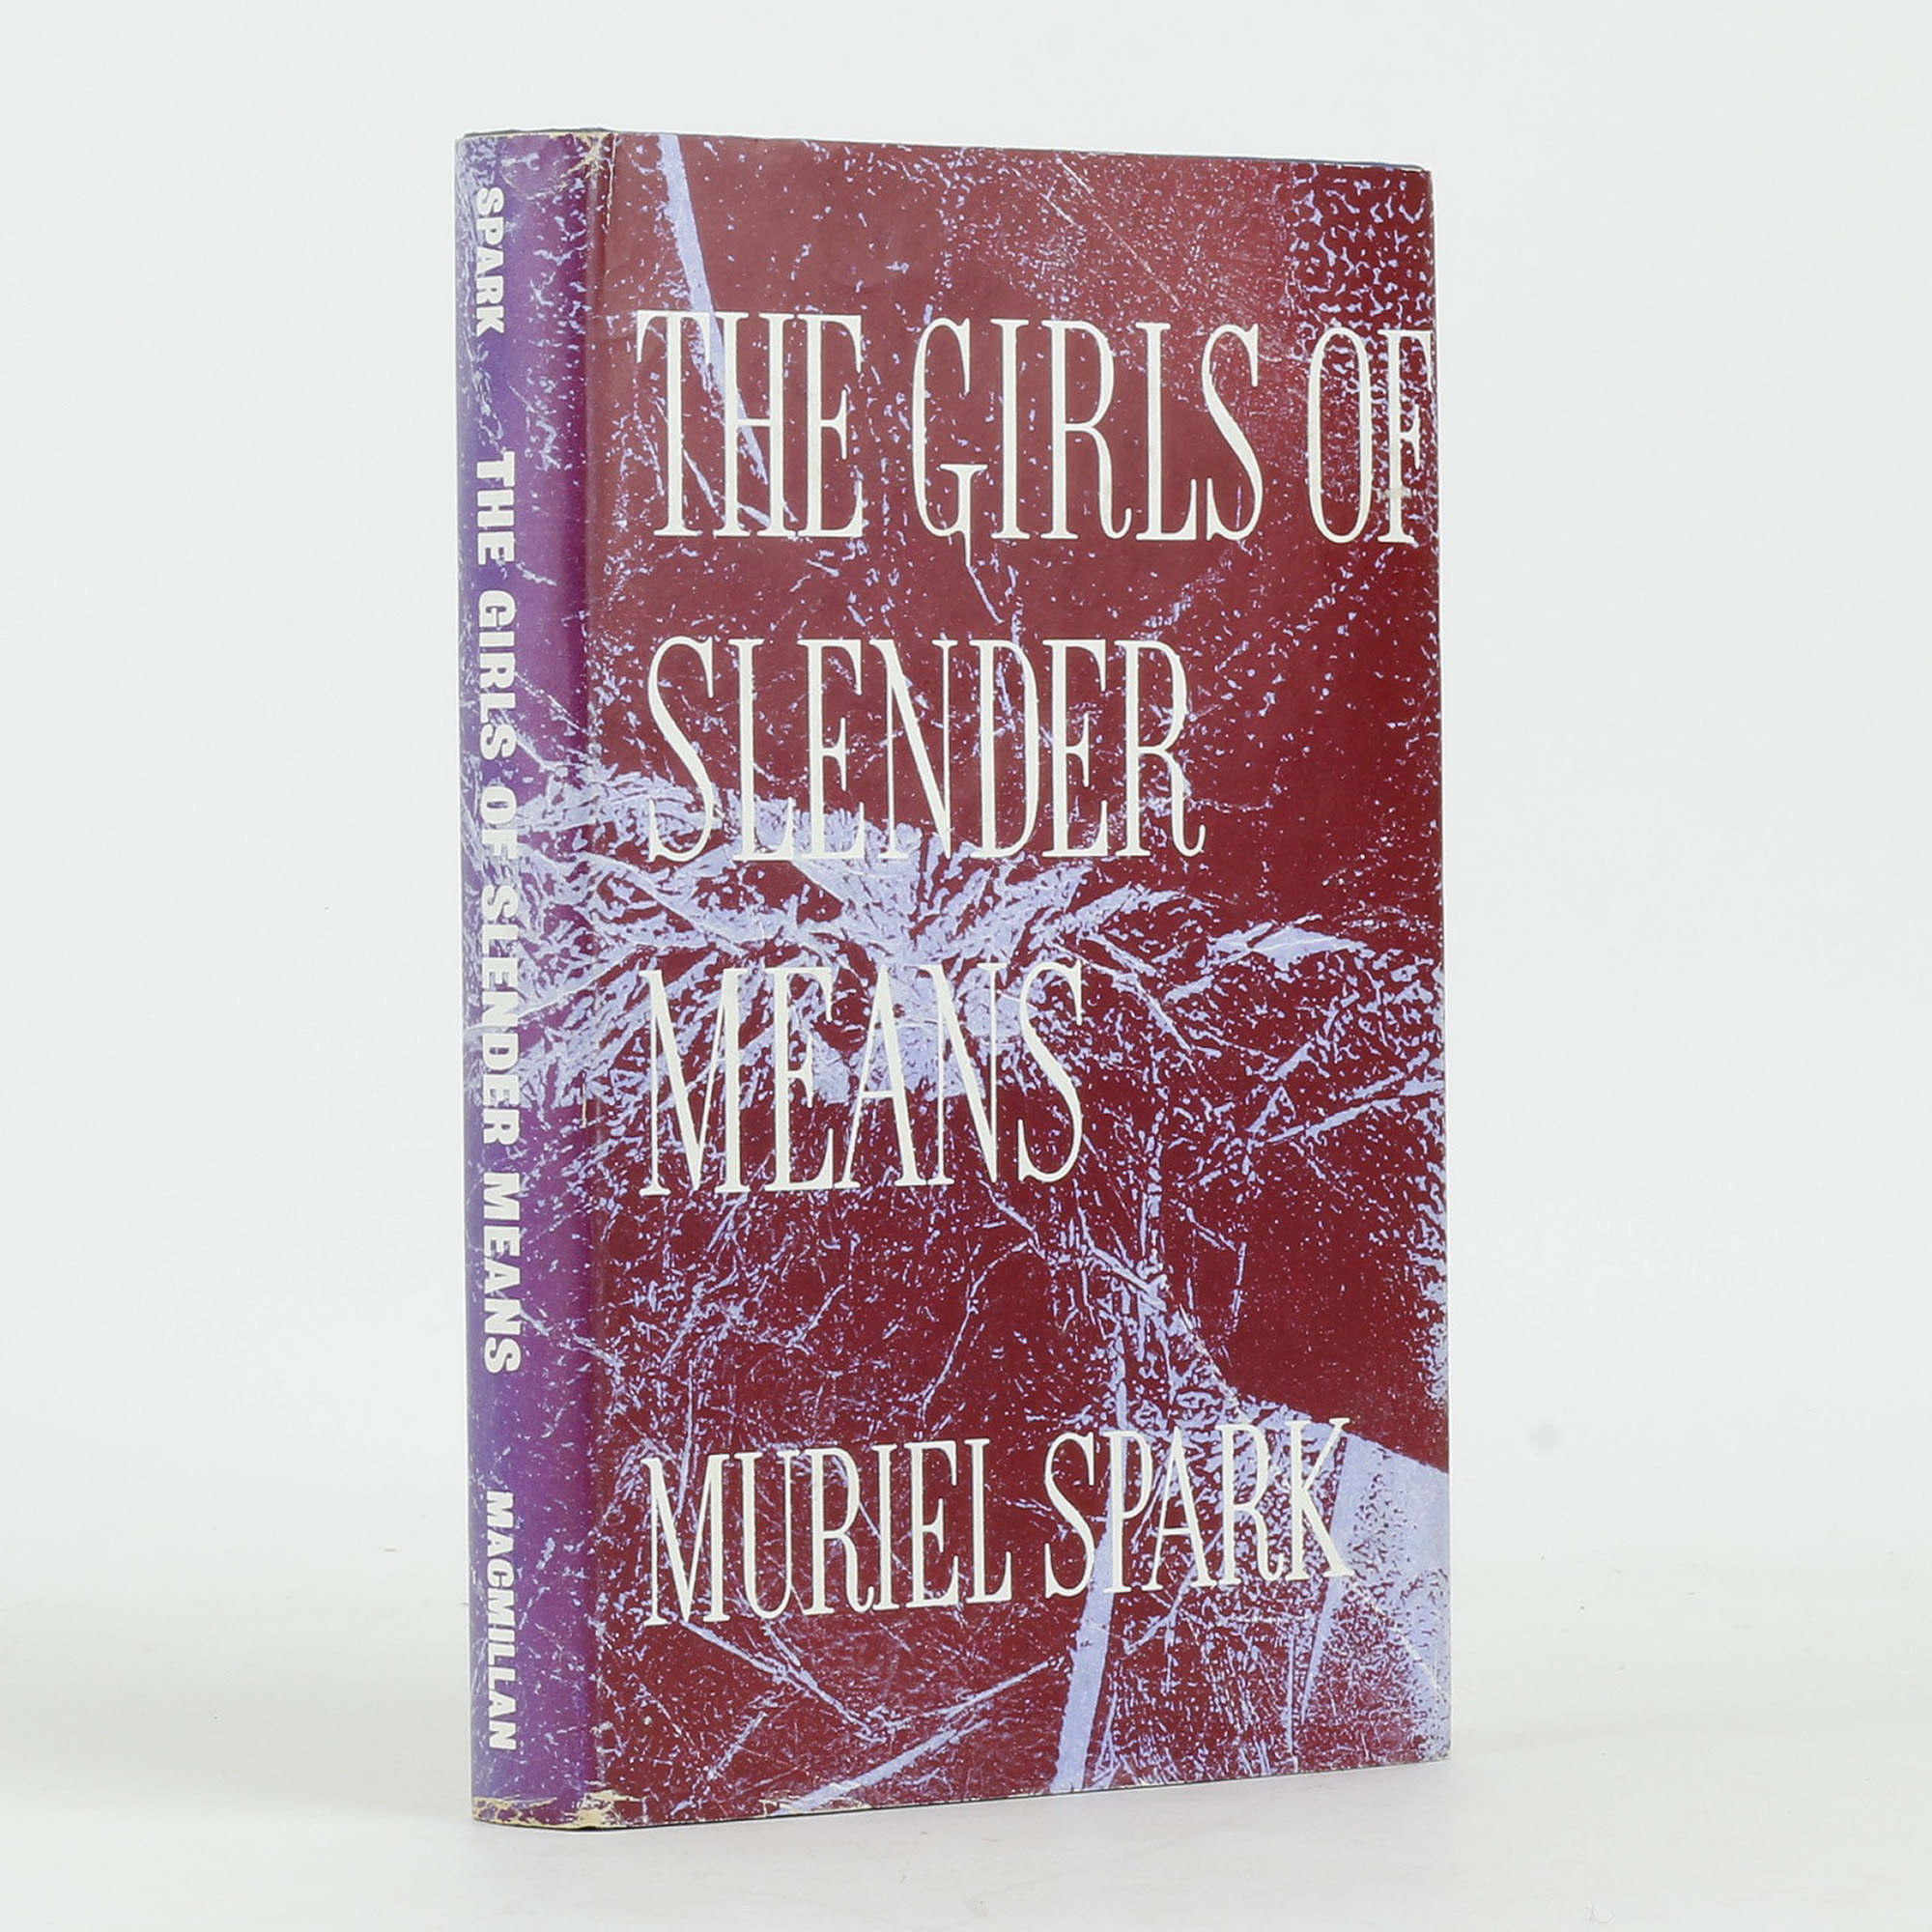 The Girls of Slender Means - , 